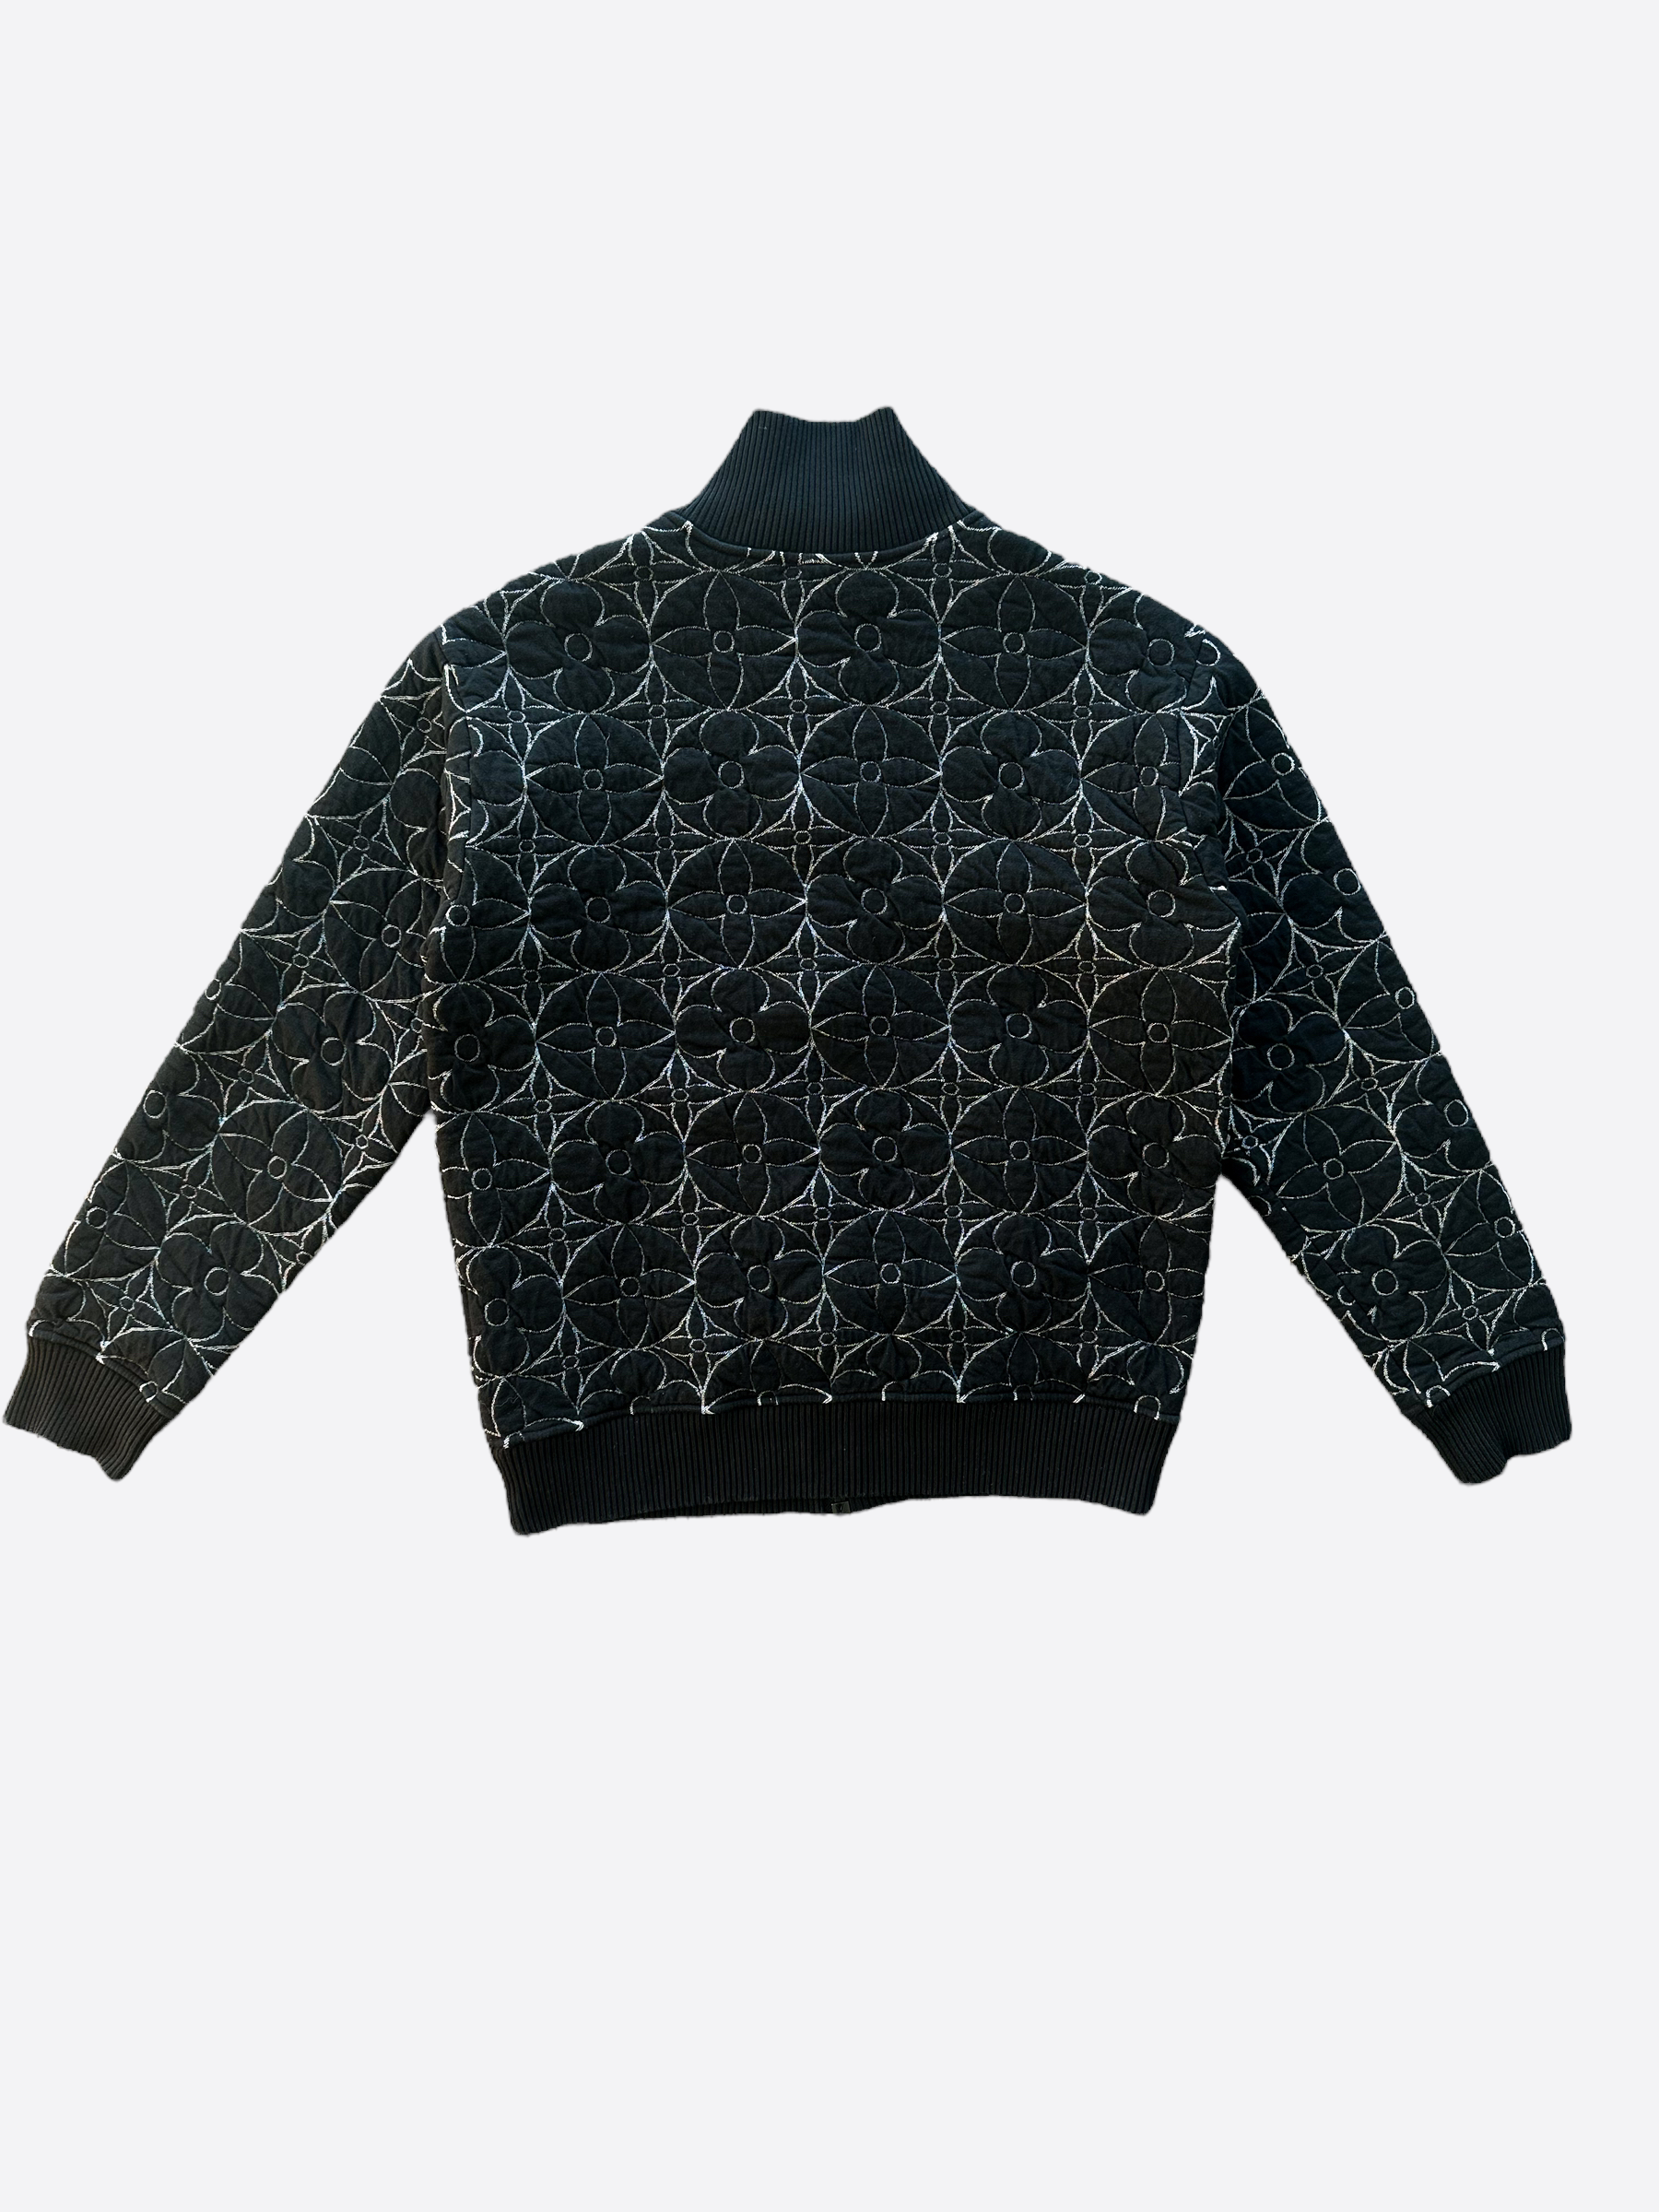 Louis Vuitton Black Flower Monogram Bomber Jacket